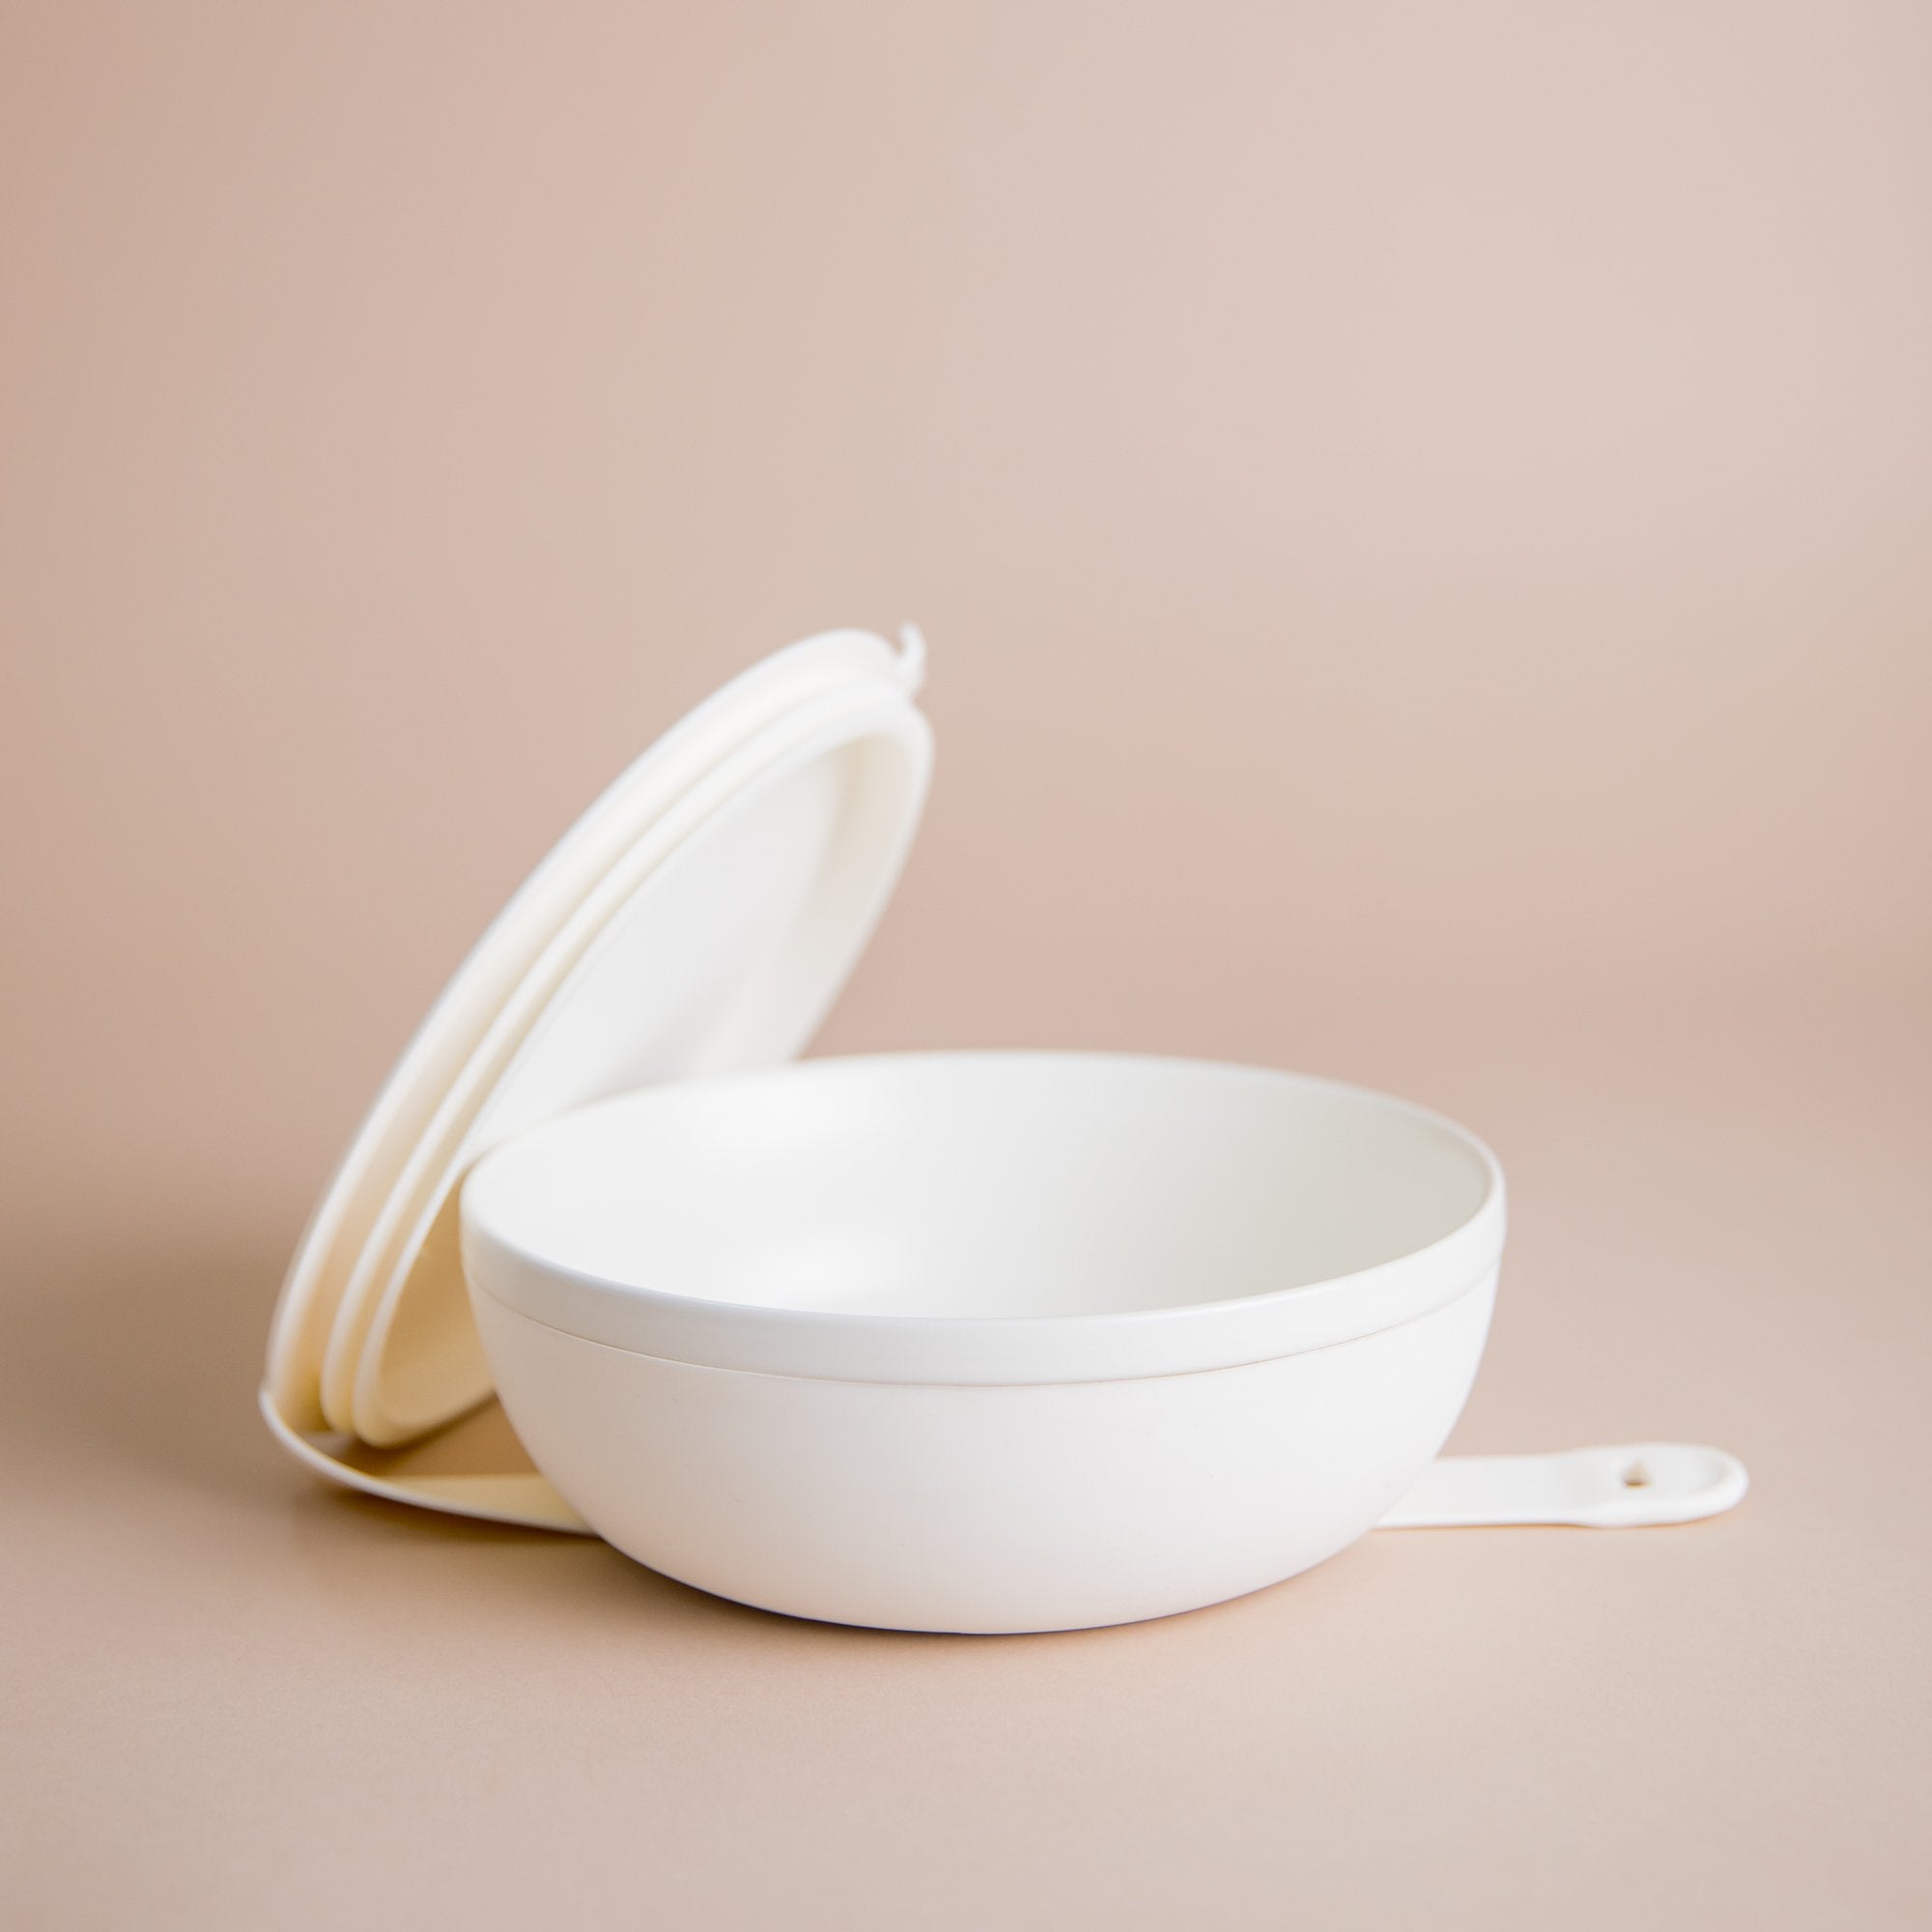 Wp porter bowl - ceramic